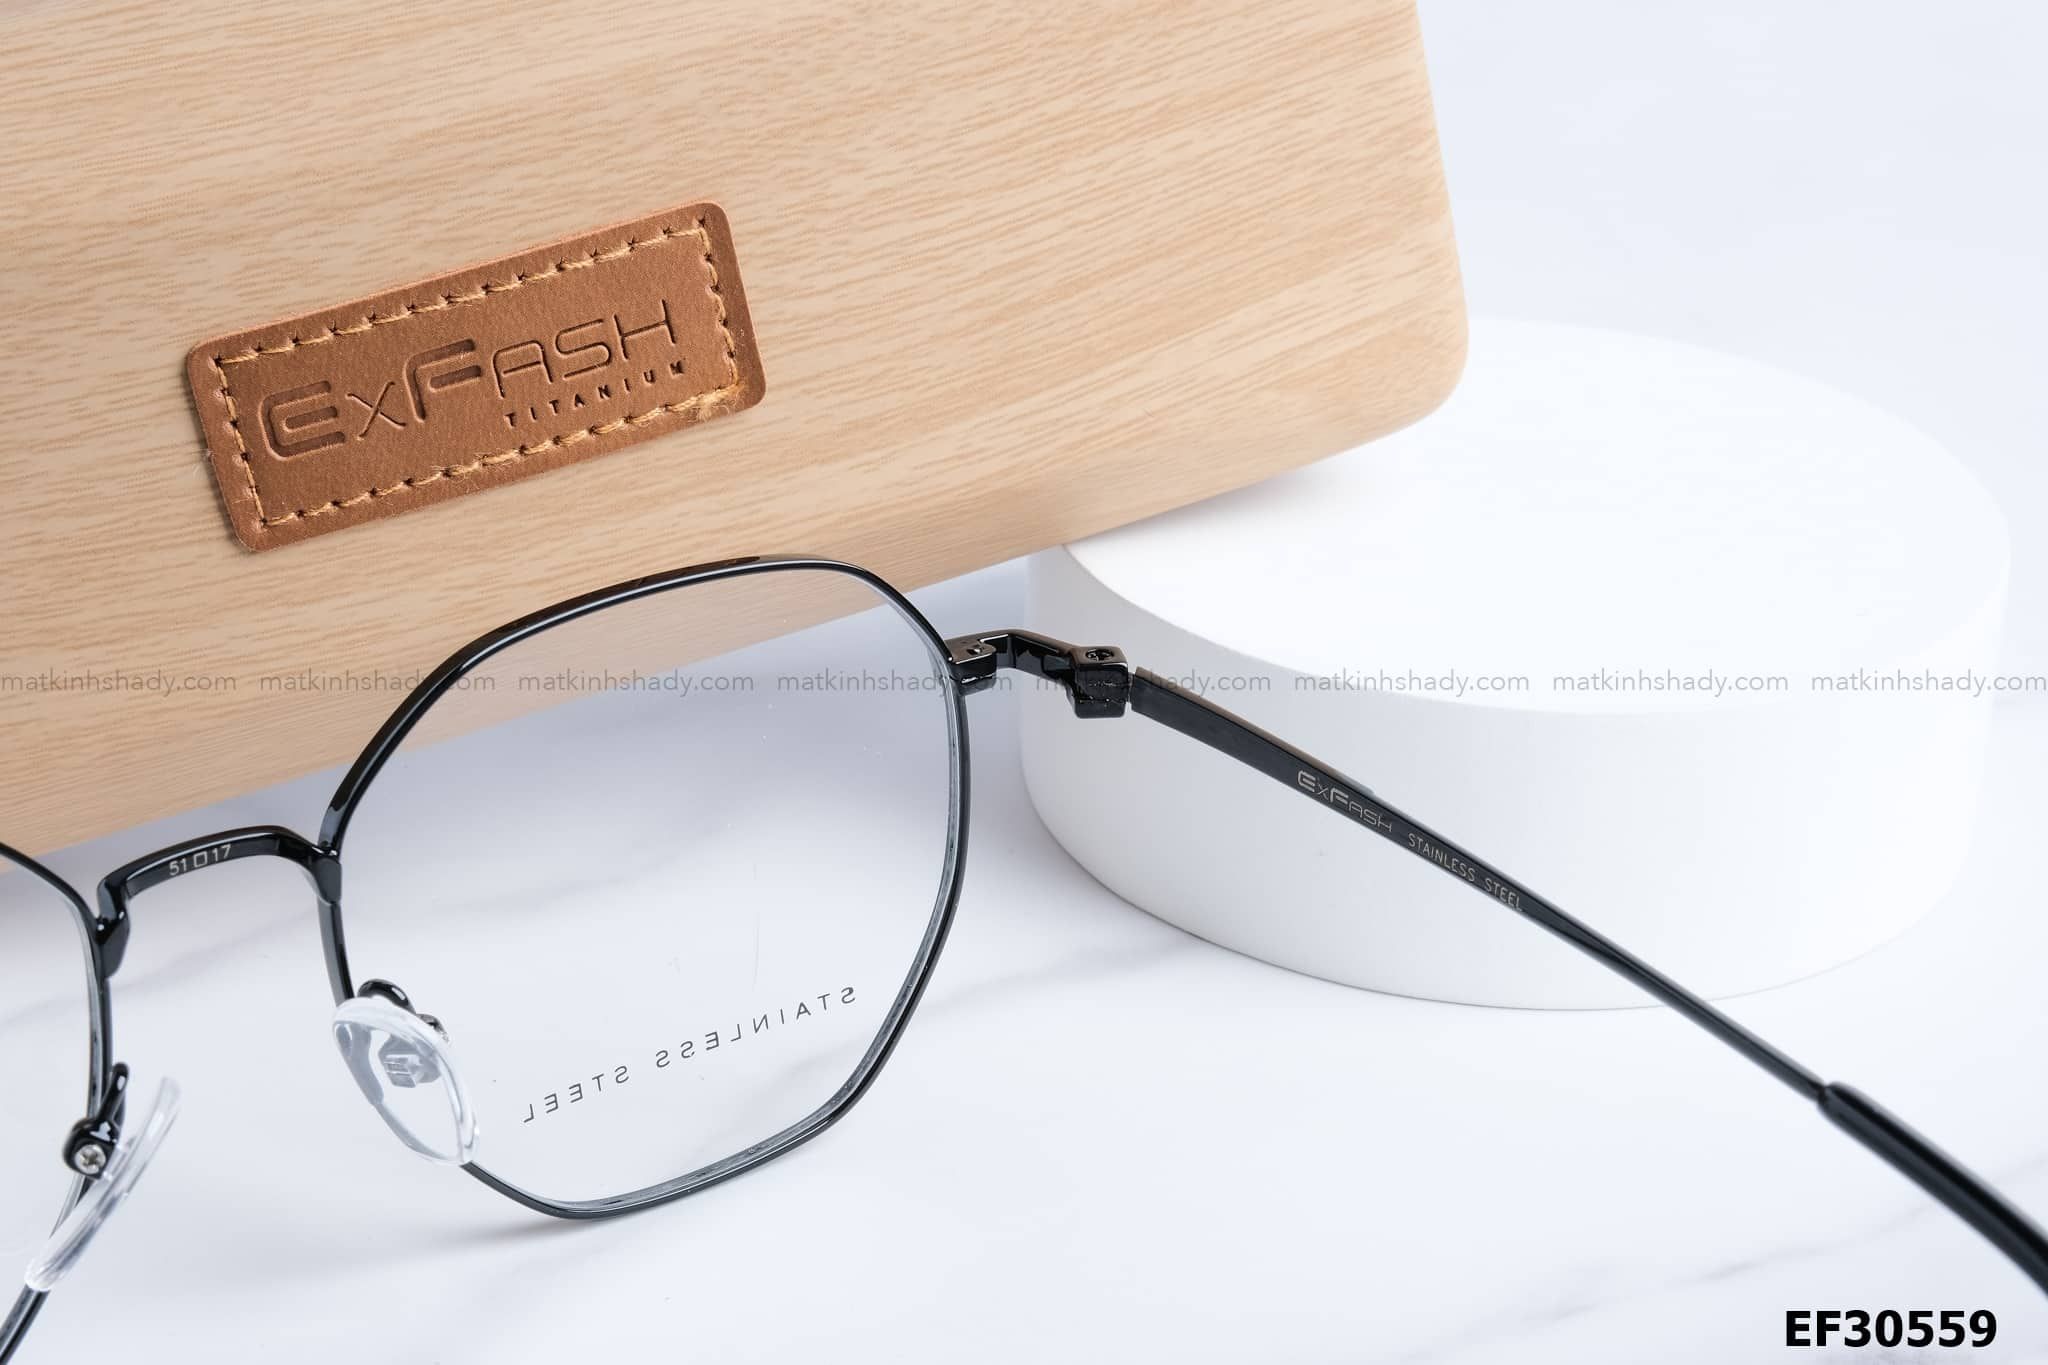  Exfash Eyewear - Glasses - EF30559 